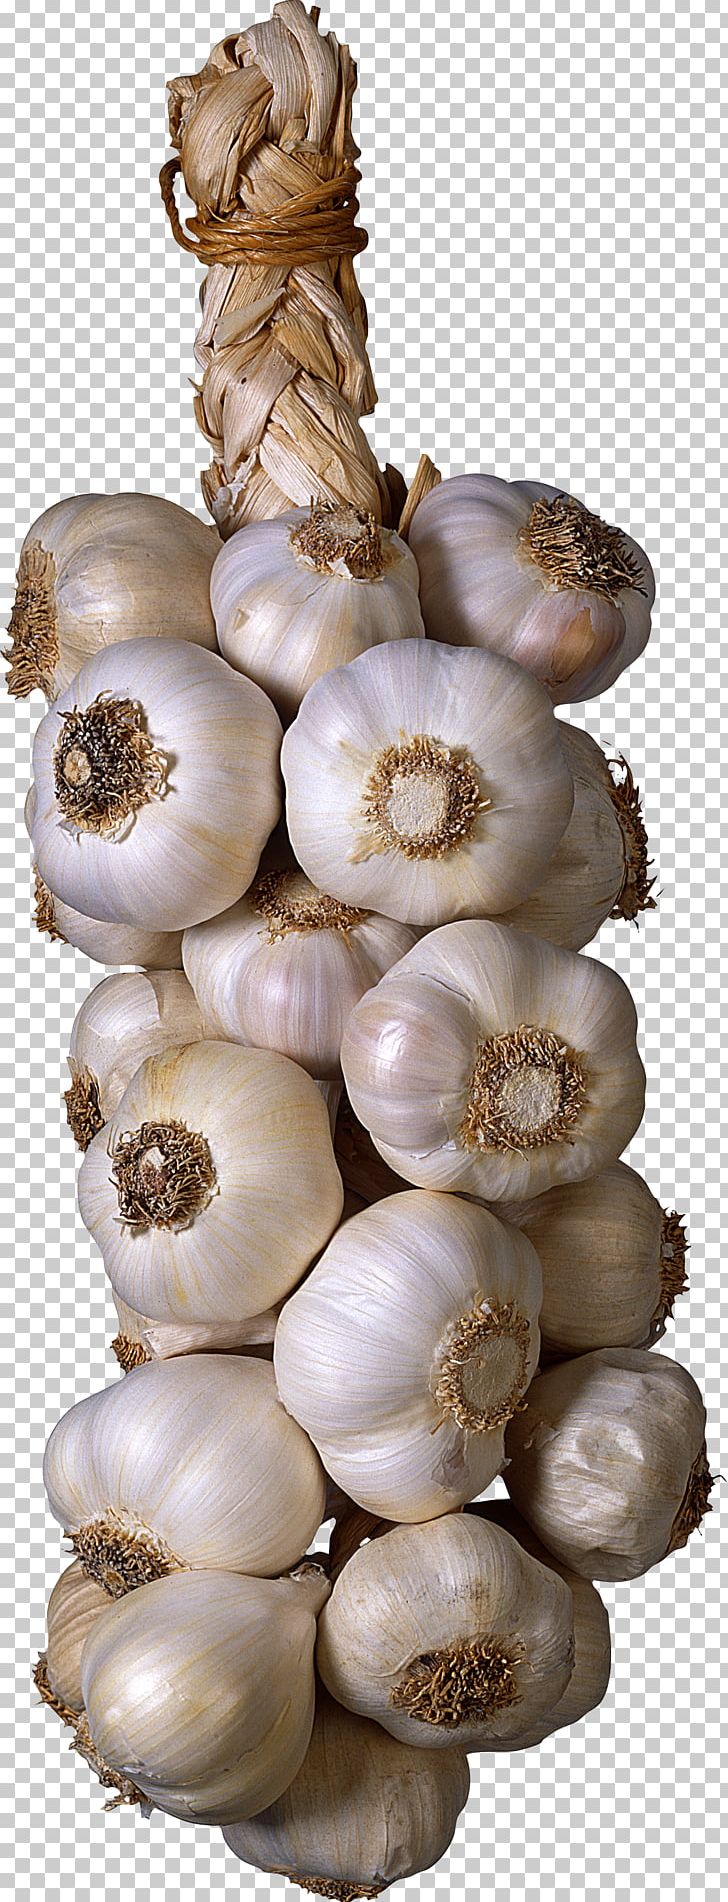 Garlic Vegetable Seasoning PNG, Clipart, Elephant Garlic, Encapsulated Postscript, Food, Garlic, Ingredient Free PNG Download